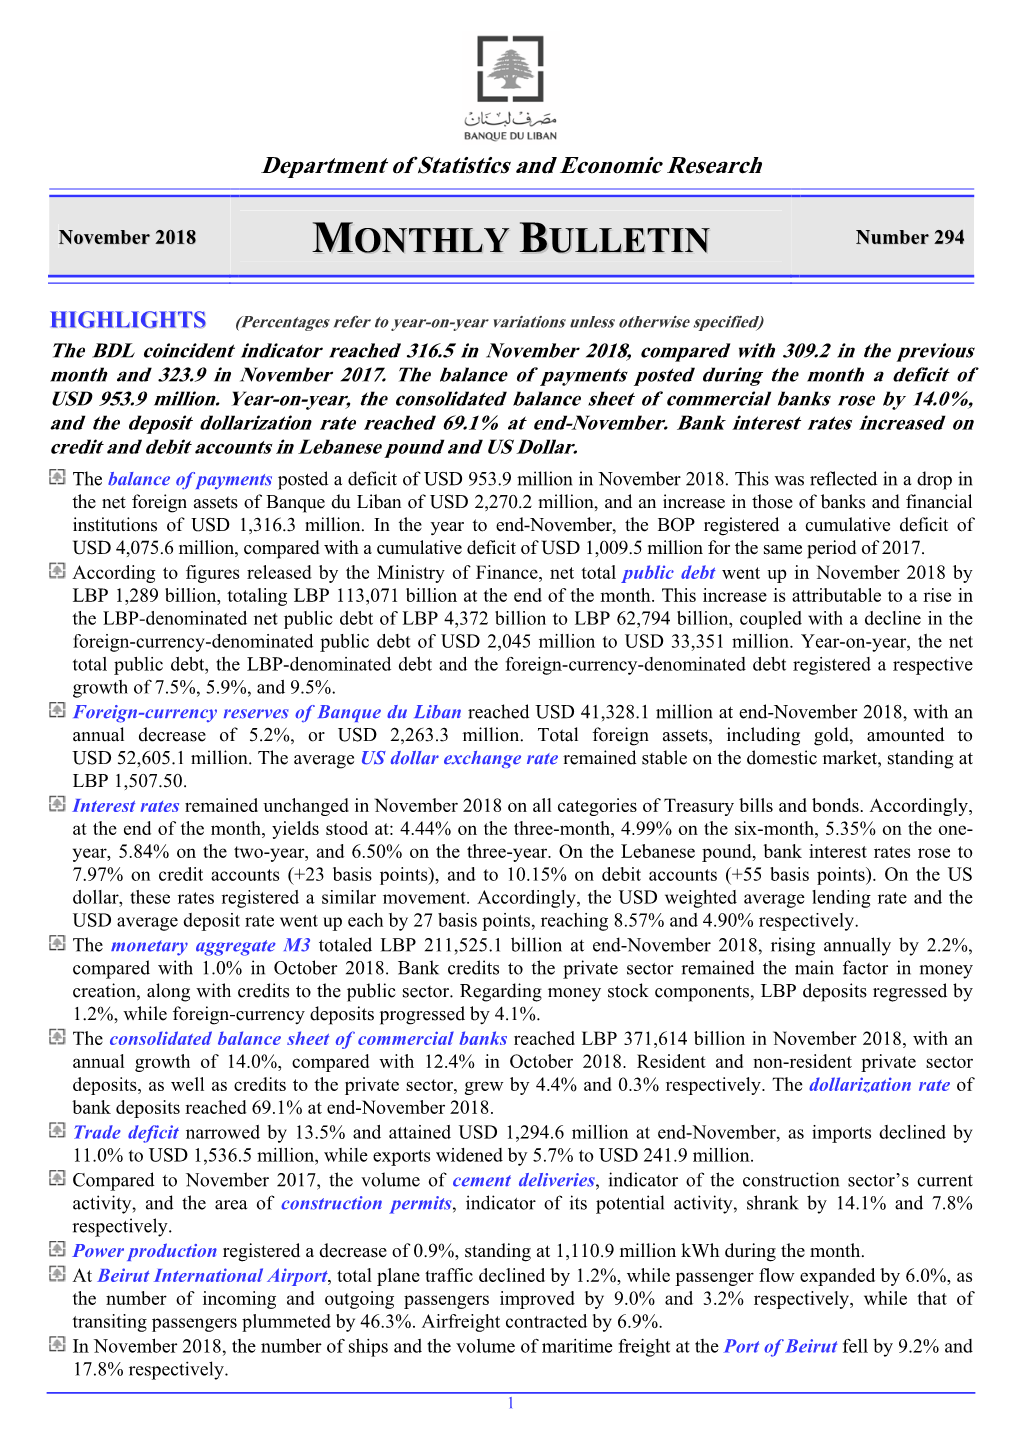 Monthly Bulletin